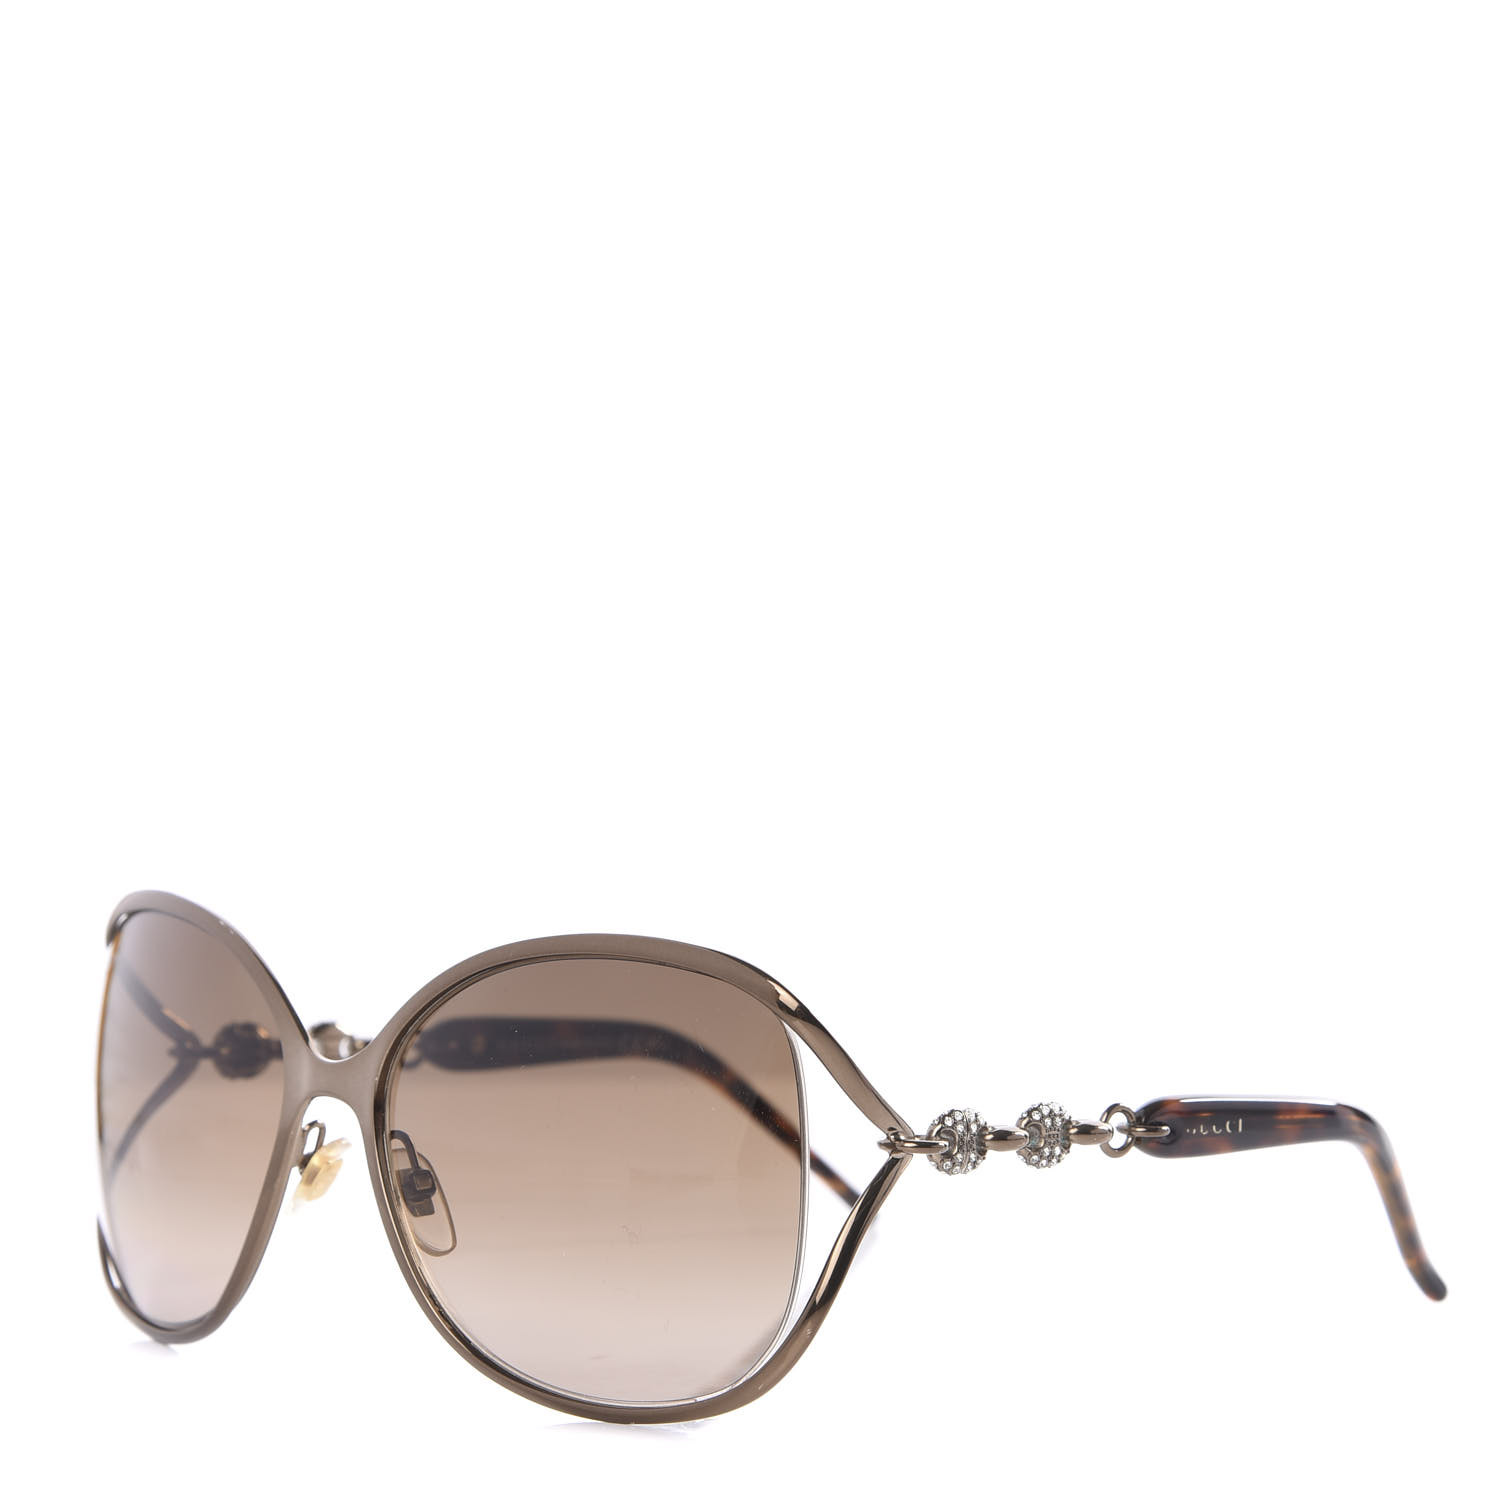 Gucci Crystal Marina Chain Sunglasses 4250 N S Tortoise 558500